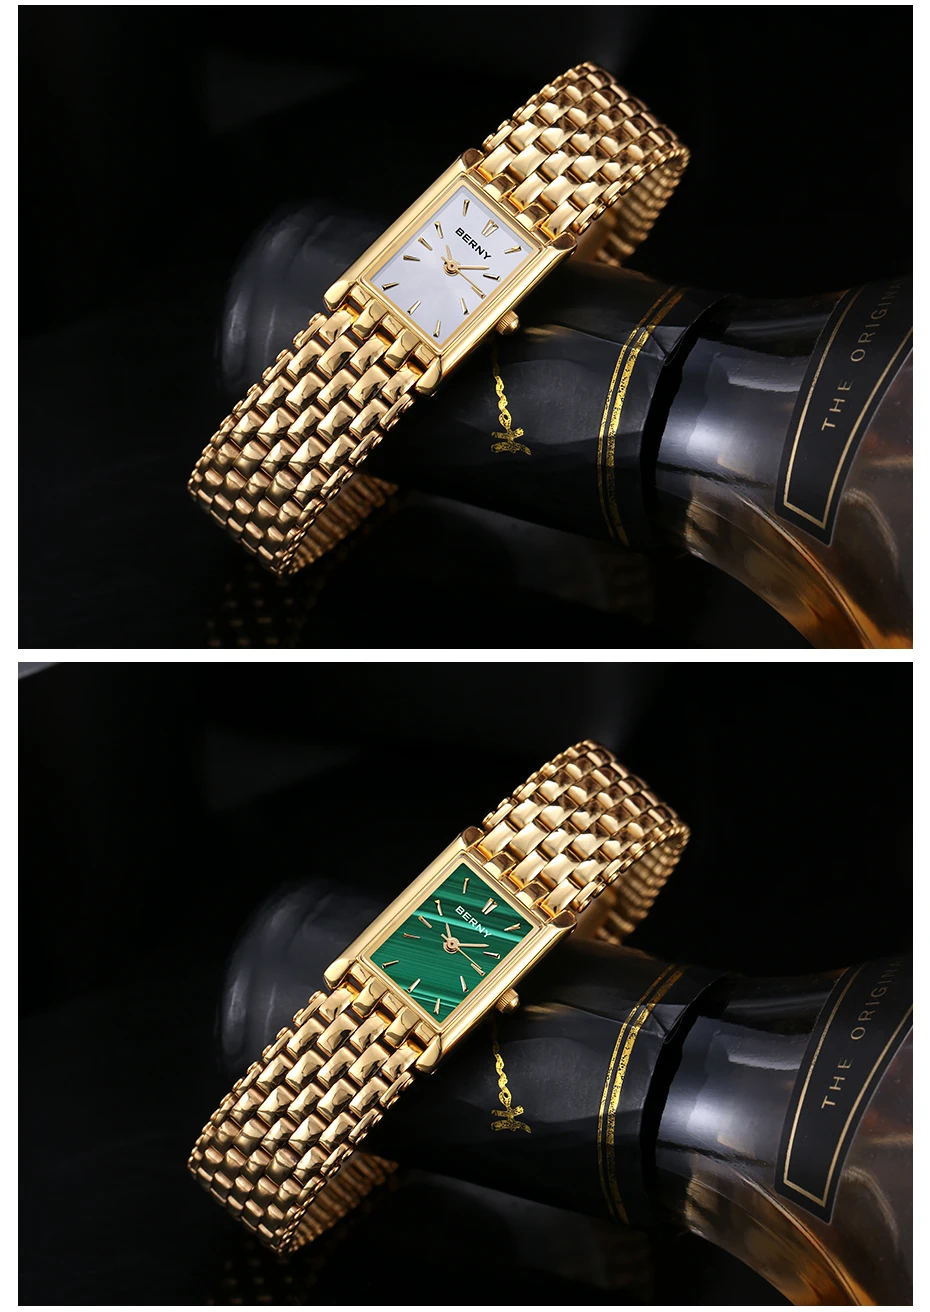 BERNY Gold Watch for Women Luxury Women's Wristwatch Waterproof Golden Female Clock Stainless Steel Fashion Quartz Ladies Watch -H3bba81c6bfd4417ab61bdfab59874eb0F